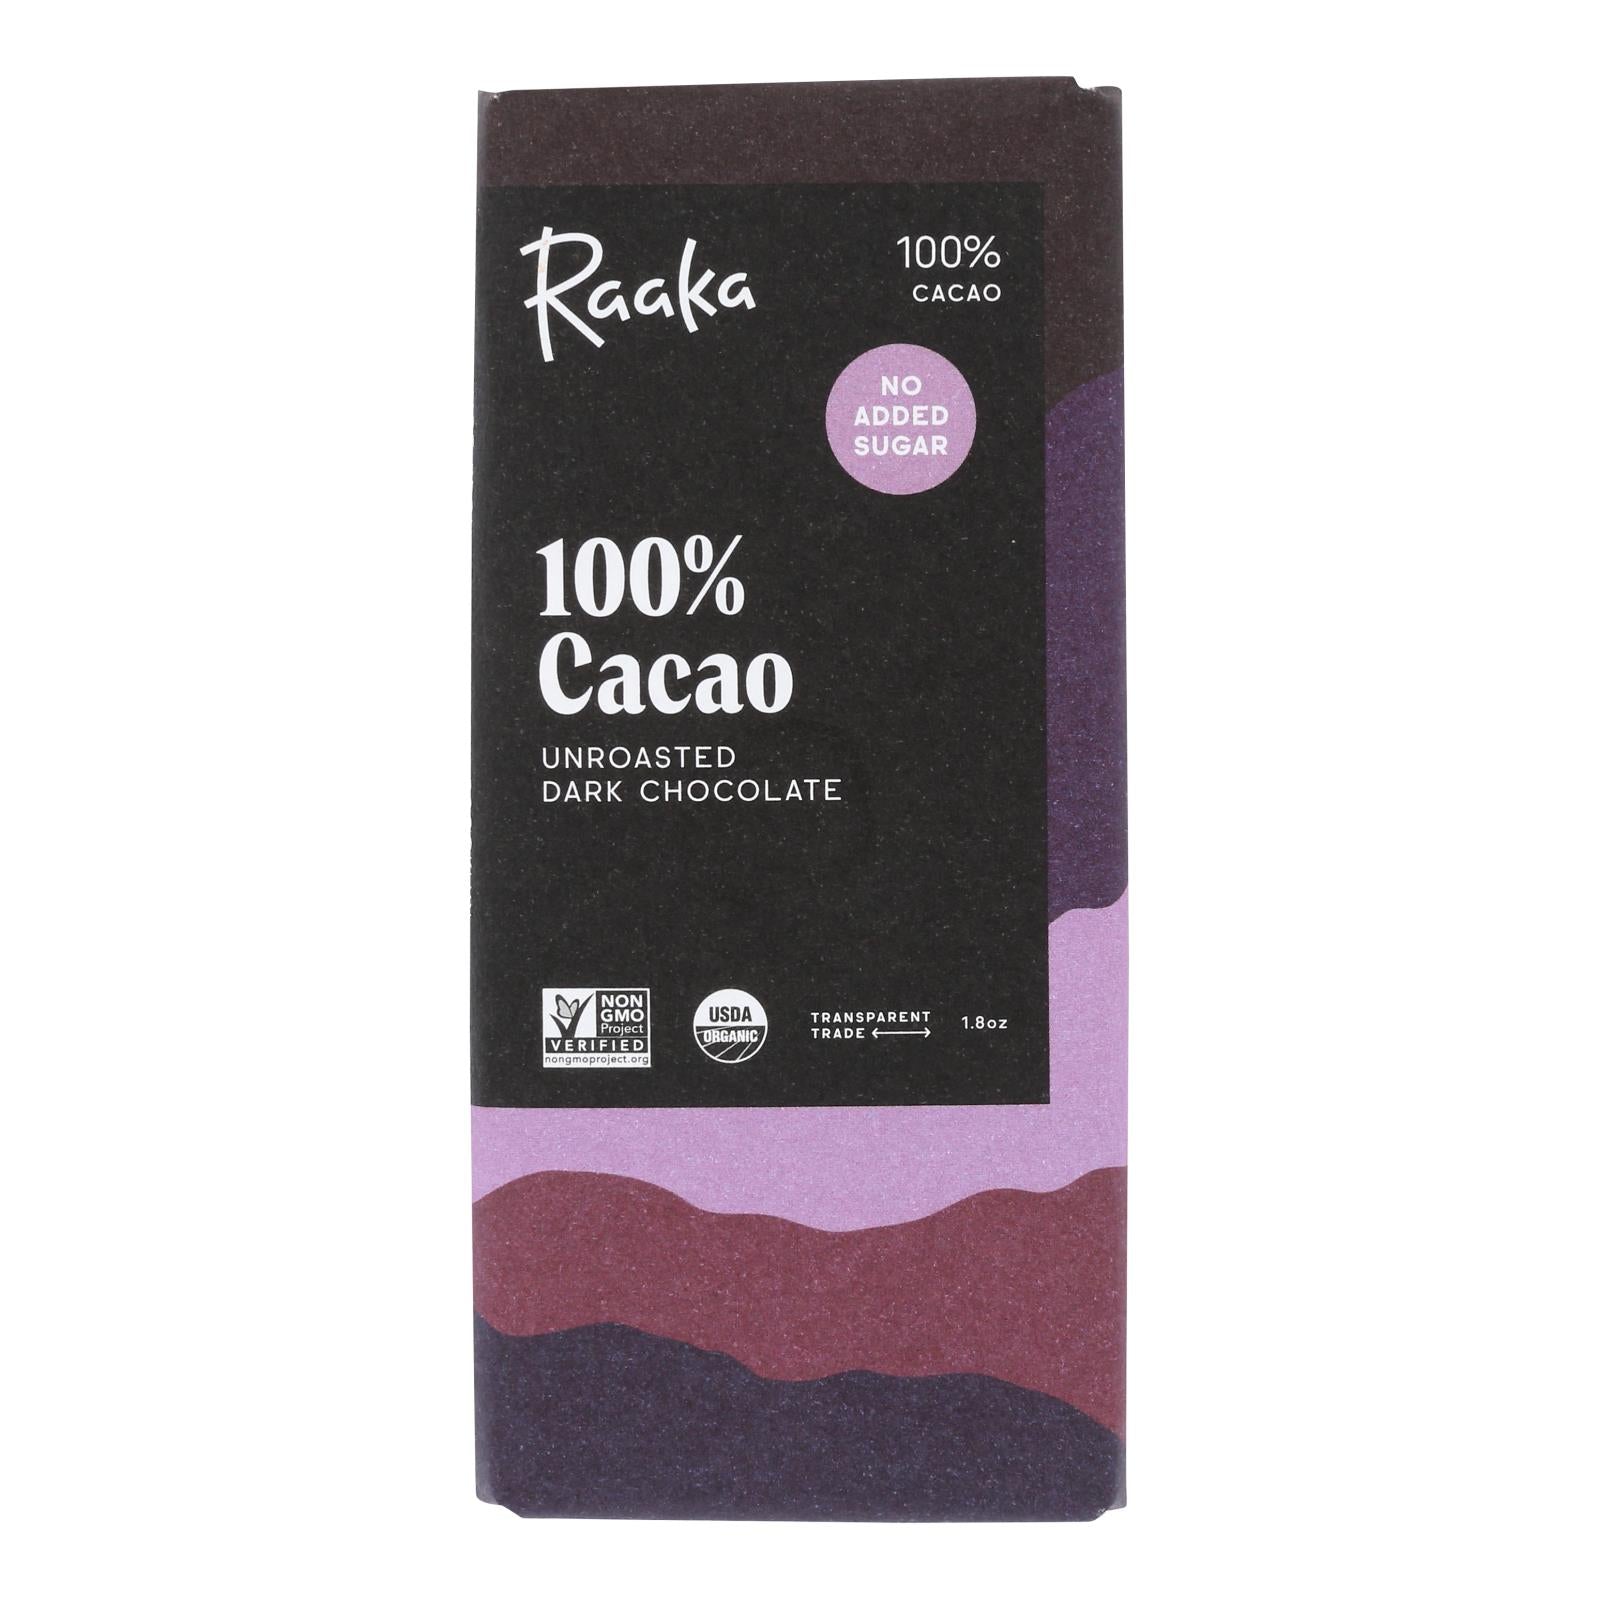 Raaka Chocolate - Bar 100% Cacao - Case of 12 - 1.8 OZ